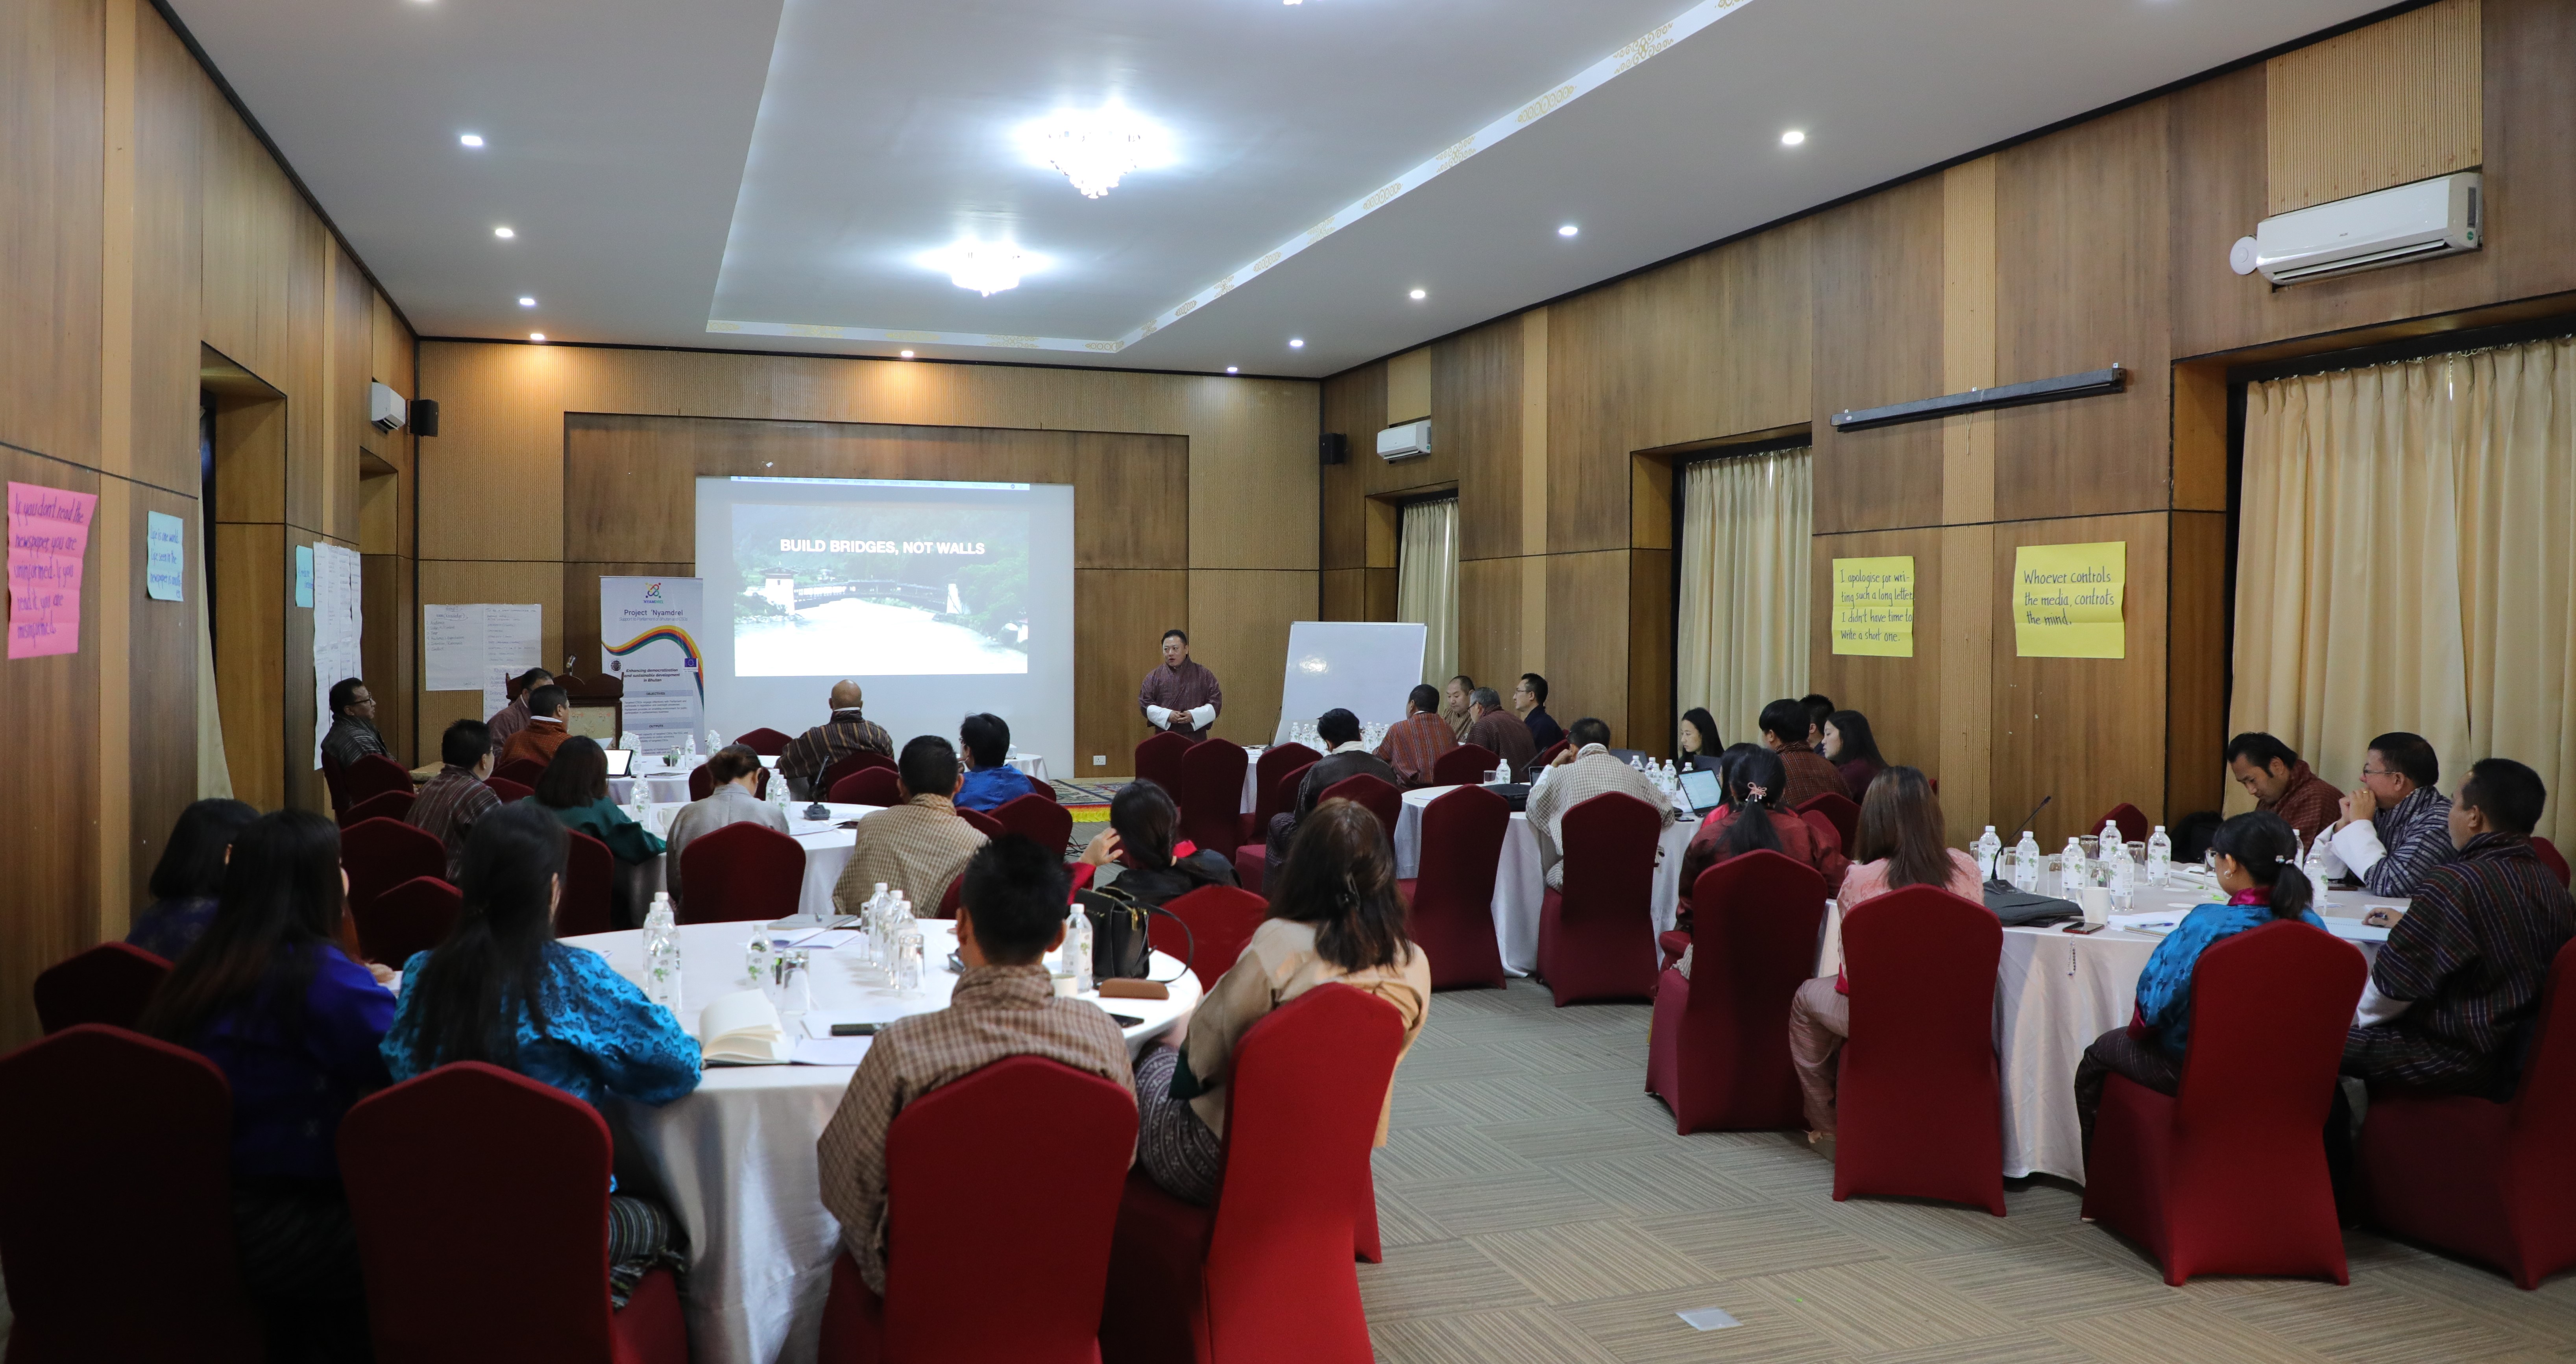 Workshops on Media Literacy Training and Effective Communication Skills in Bhutan